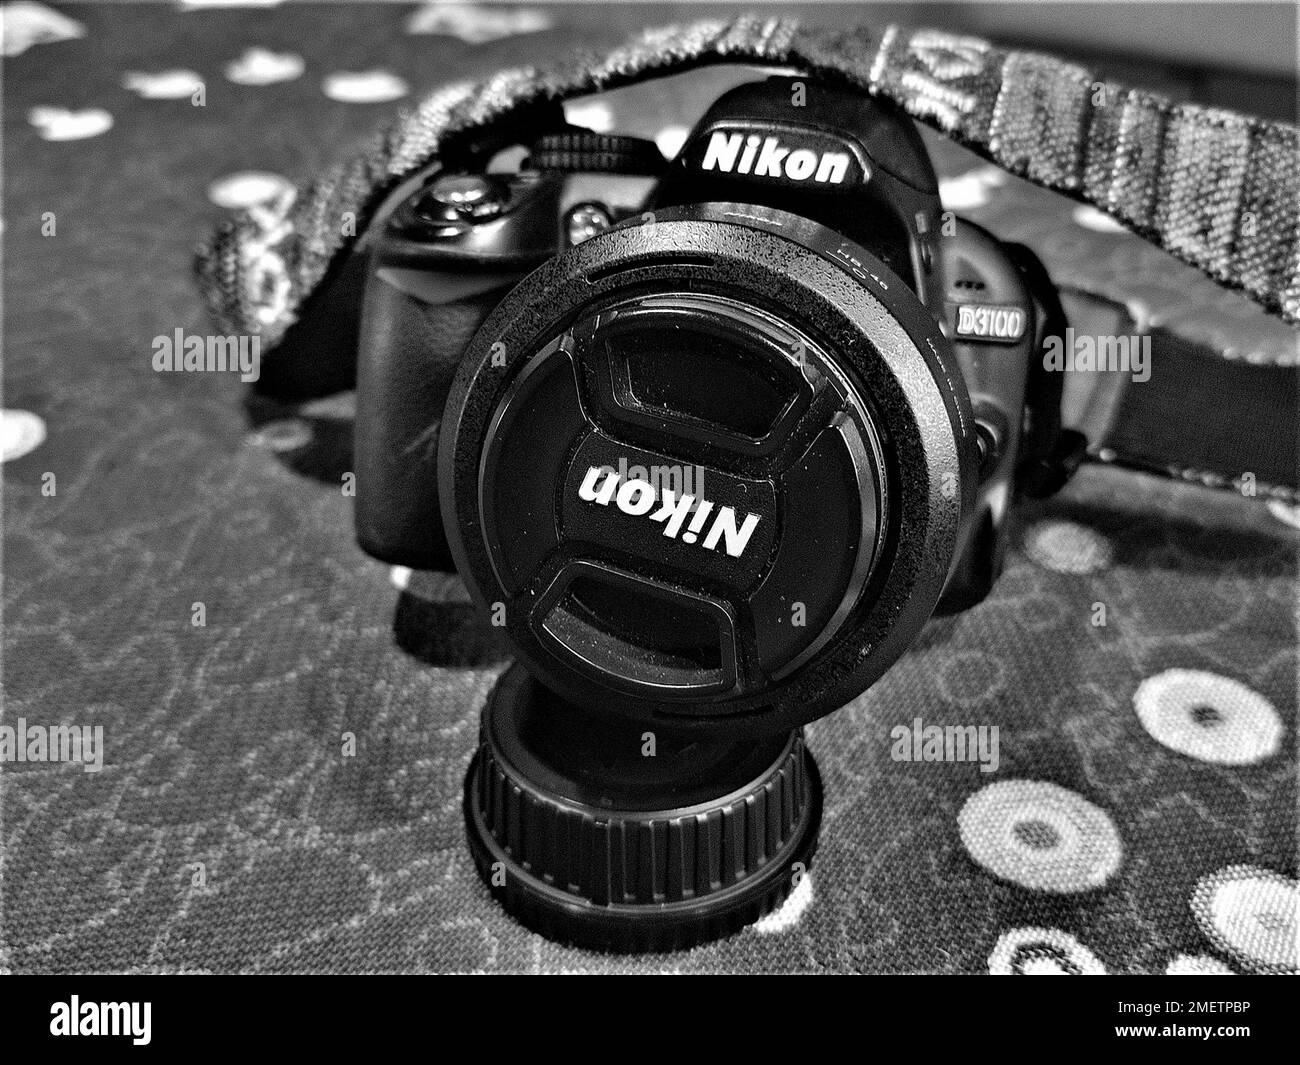 Brands Nikon D3100 Camera Body + 35mm Lens Stock Photo